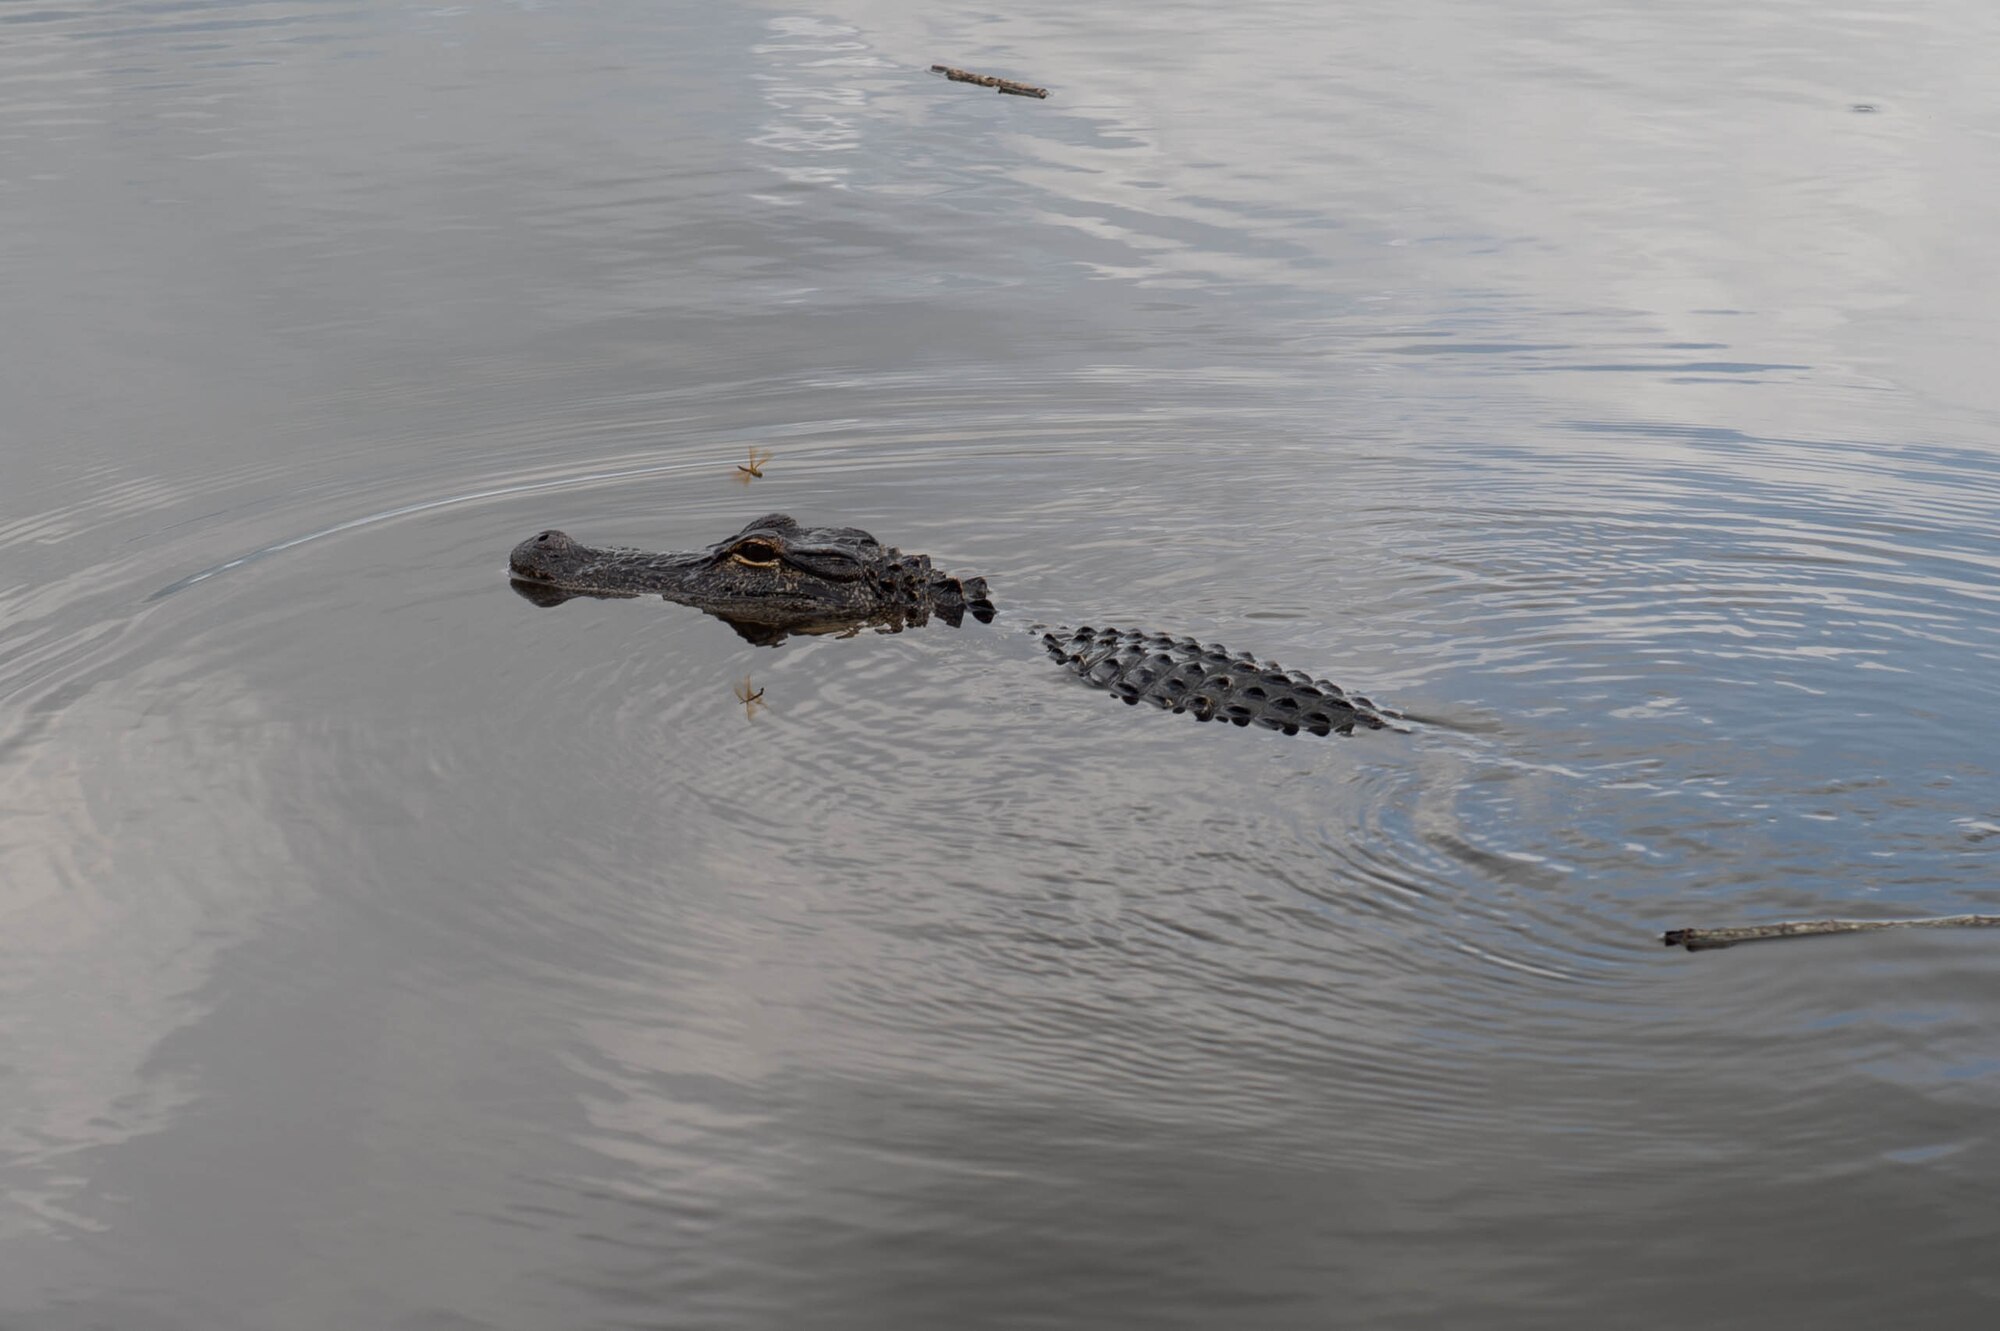 A photo of an alligator.